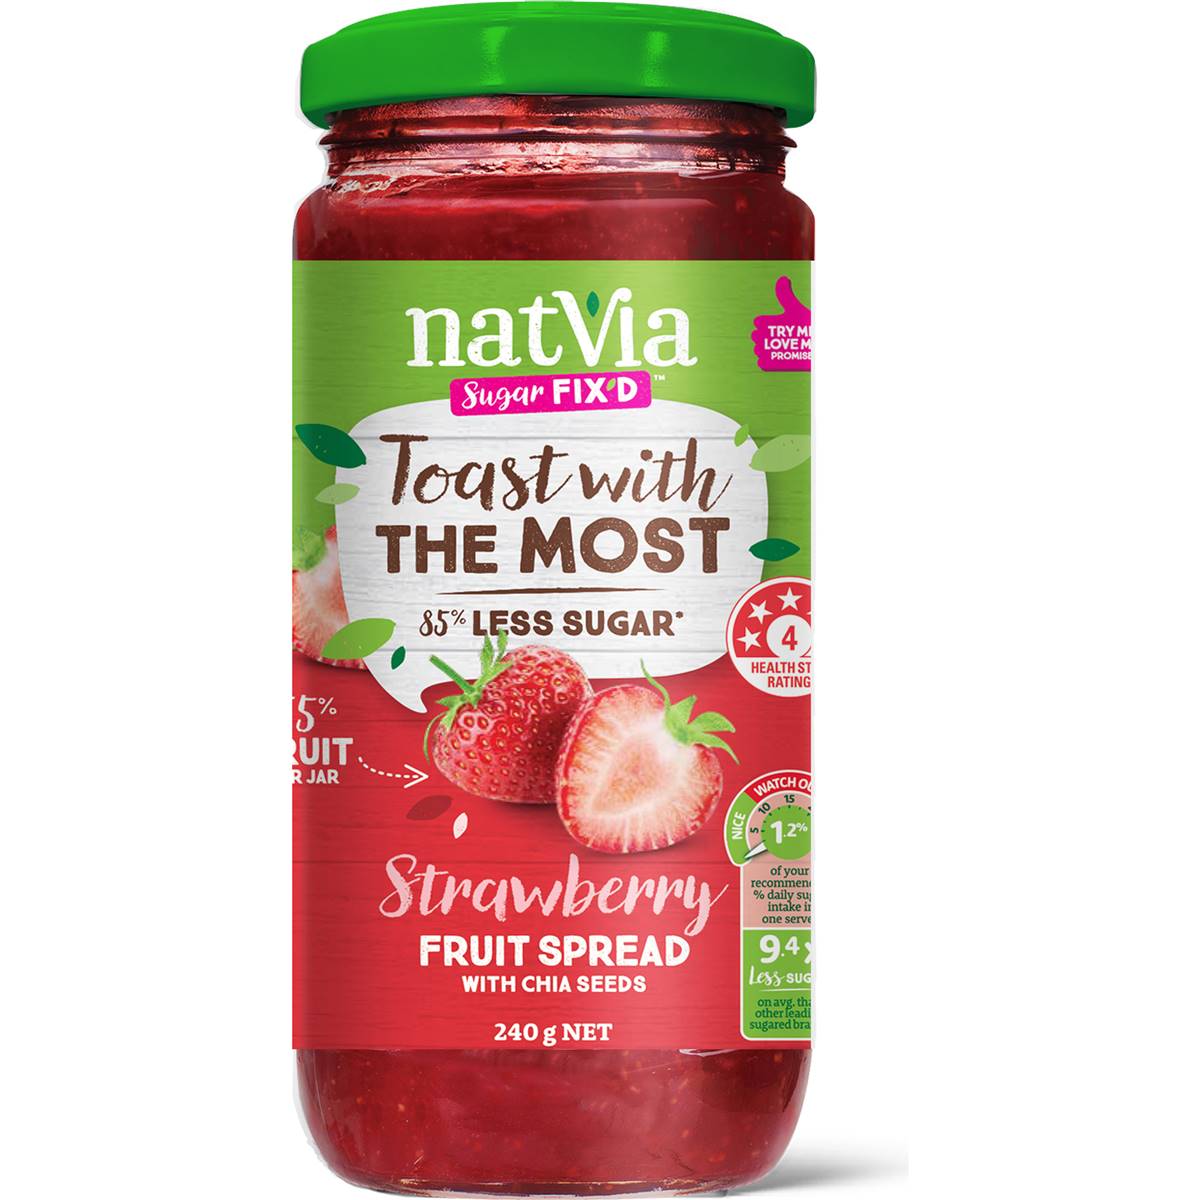 Calories in Natvia Strawberry Fruit Spread